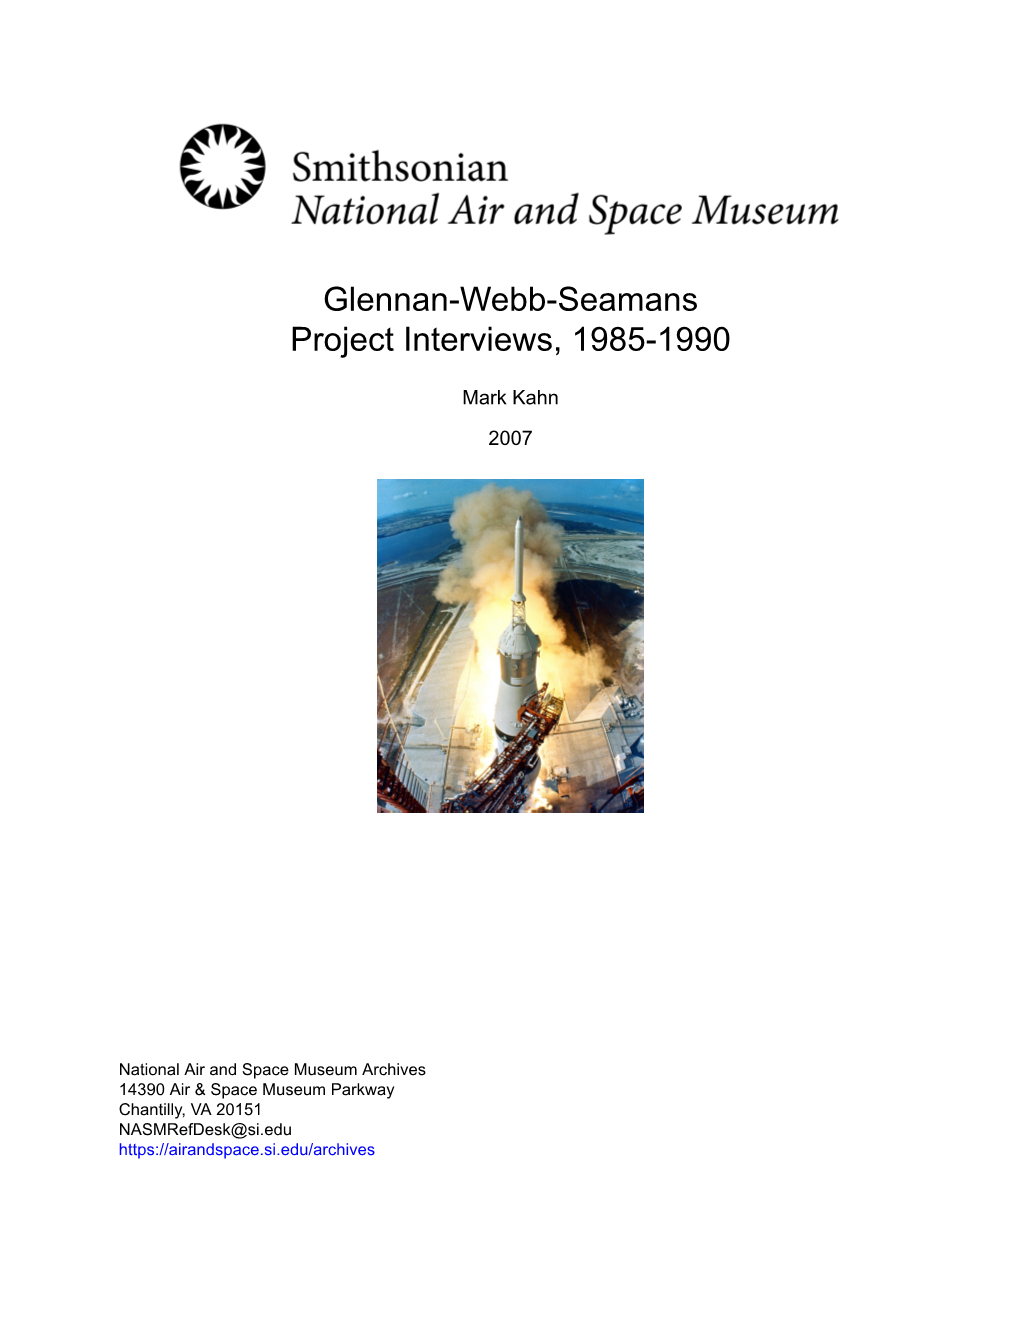 Glennan-Webb-Seamans Project Interviews, 1985-1990